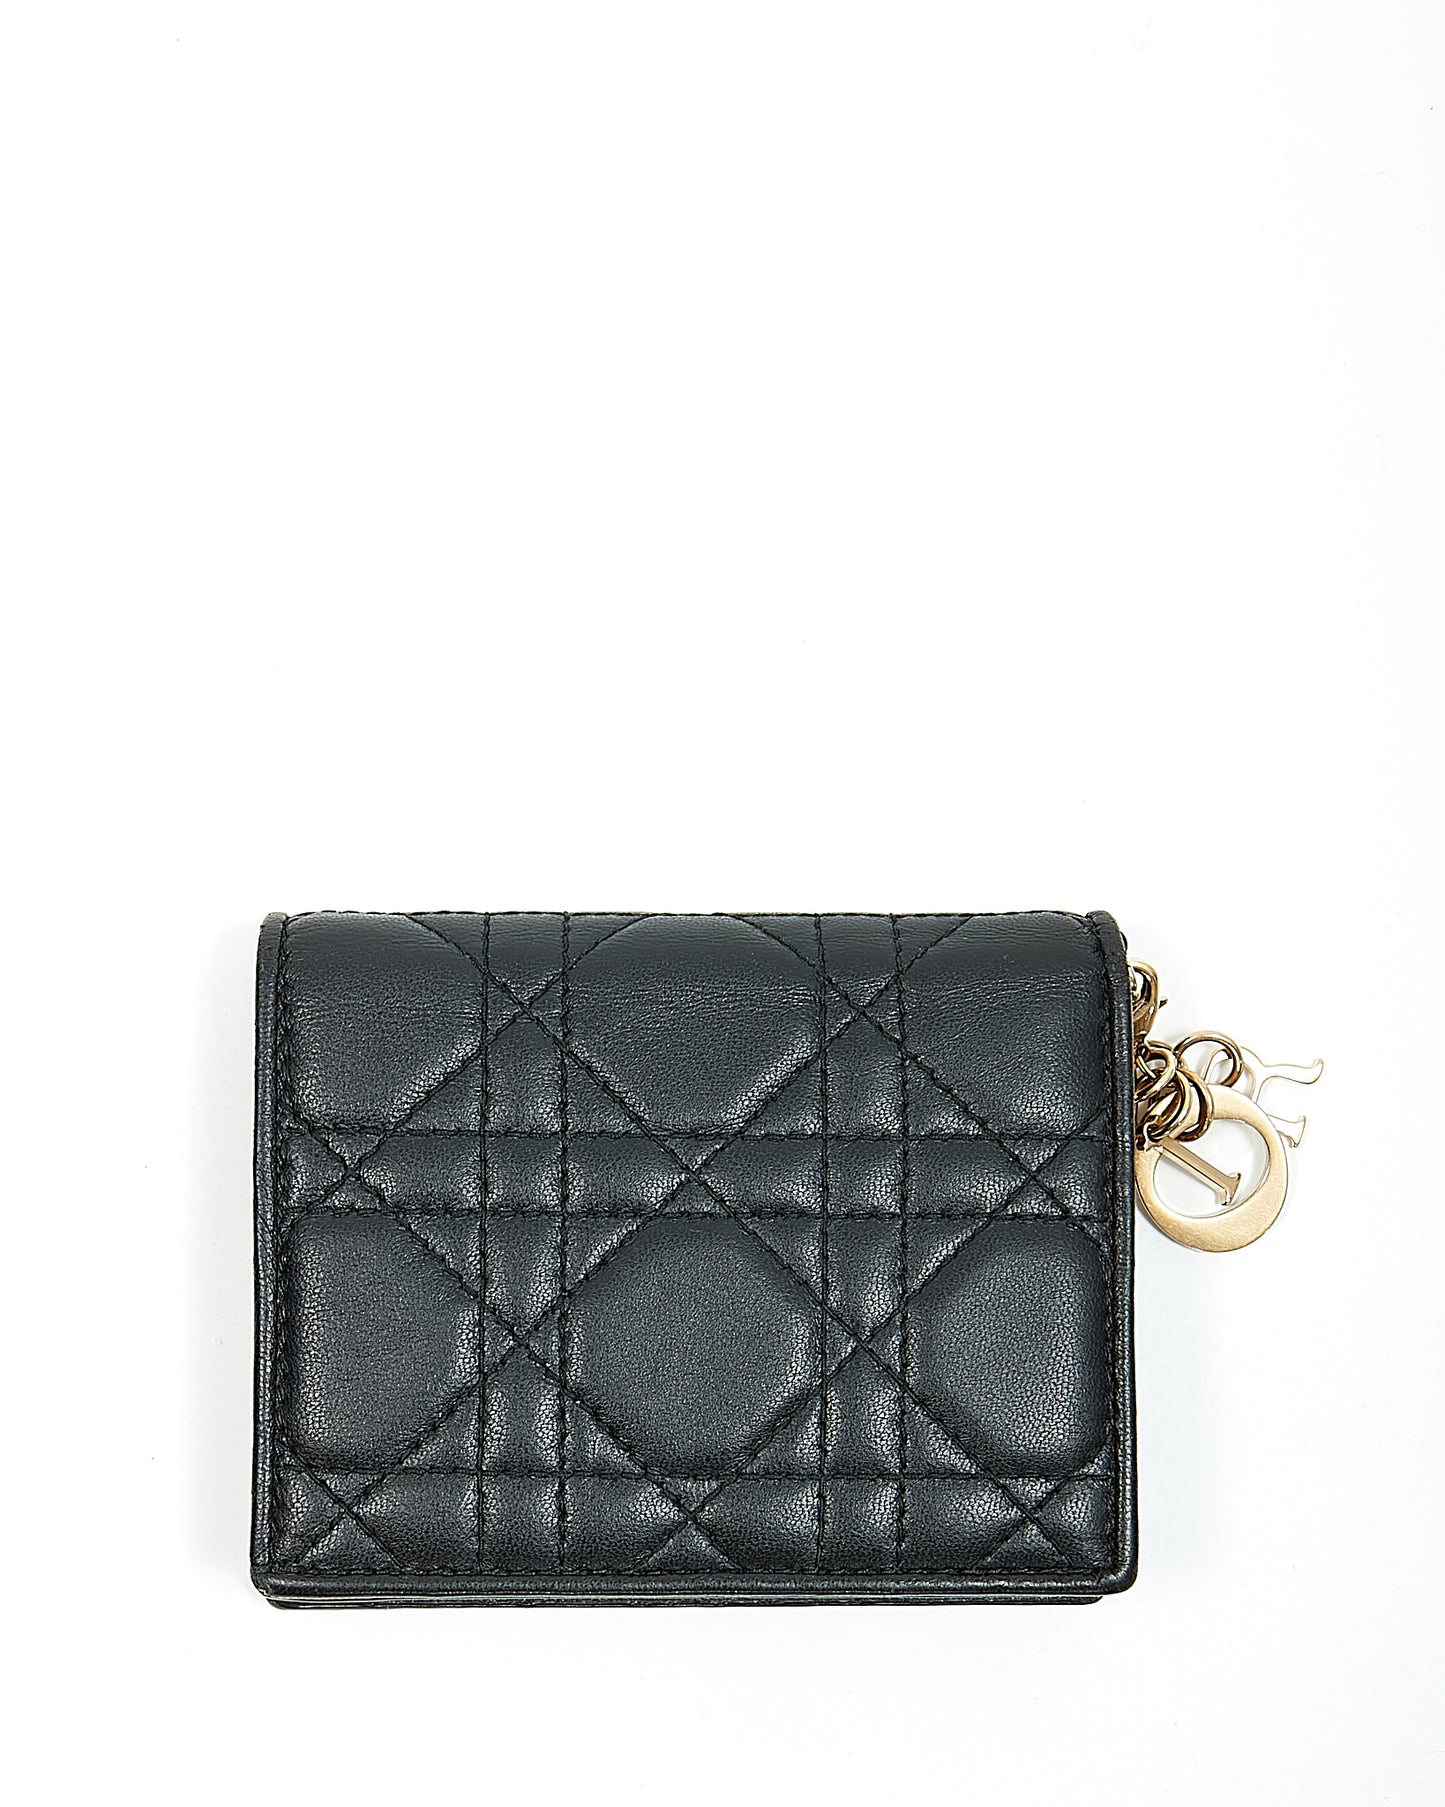 Dior Black Leather Cannage Lady Dior Mini Wallet